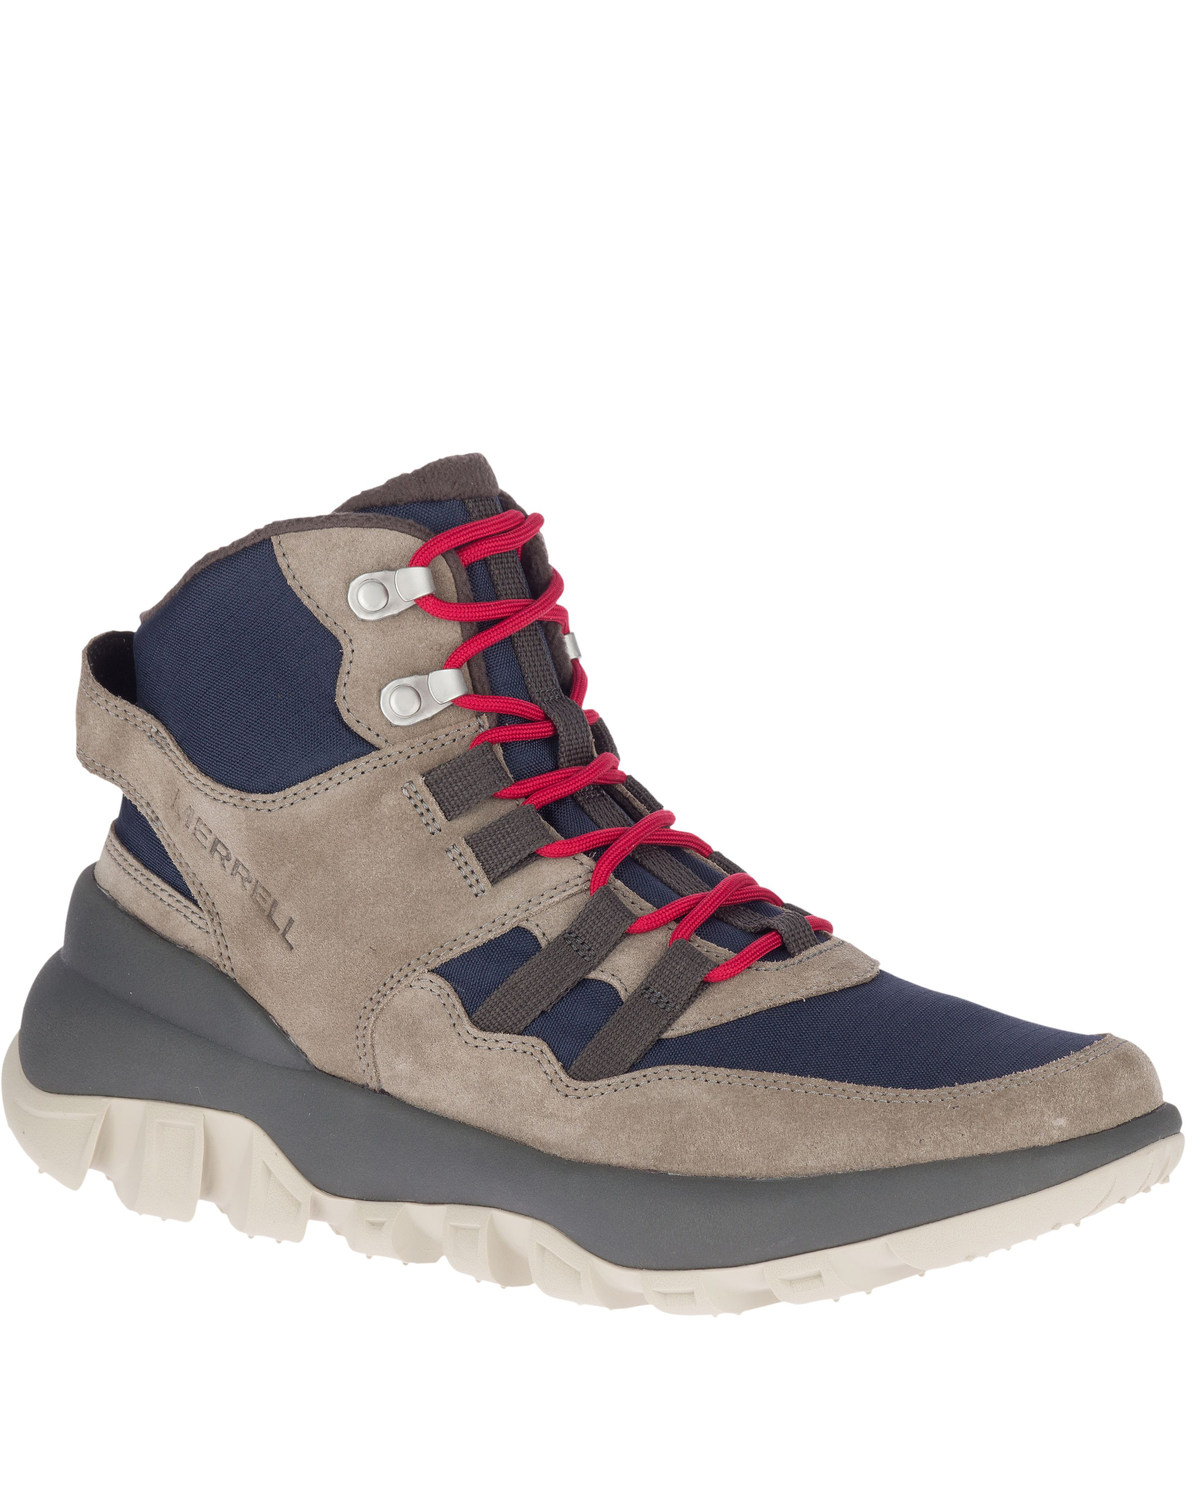 Merrell Men's ATB Polar Waterproof Hiking Boots - Soft Toe